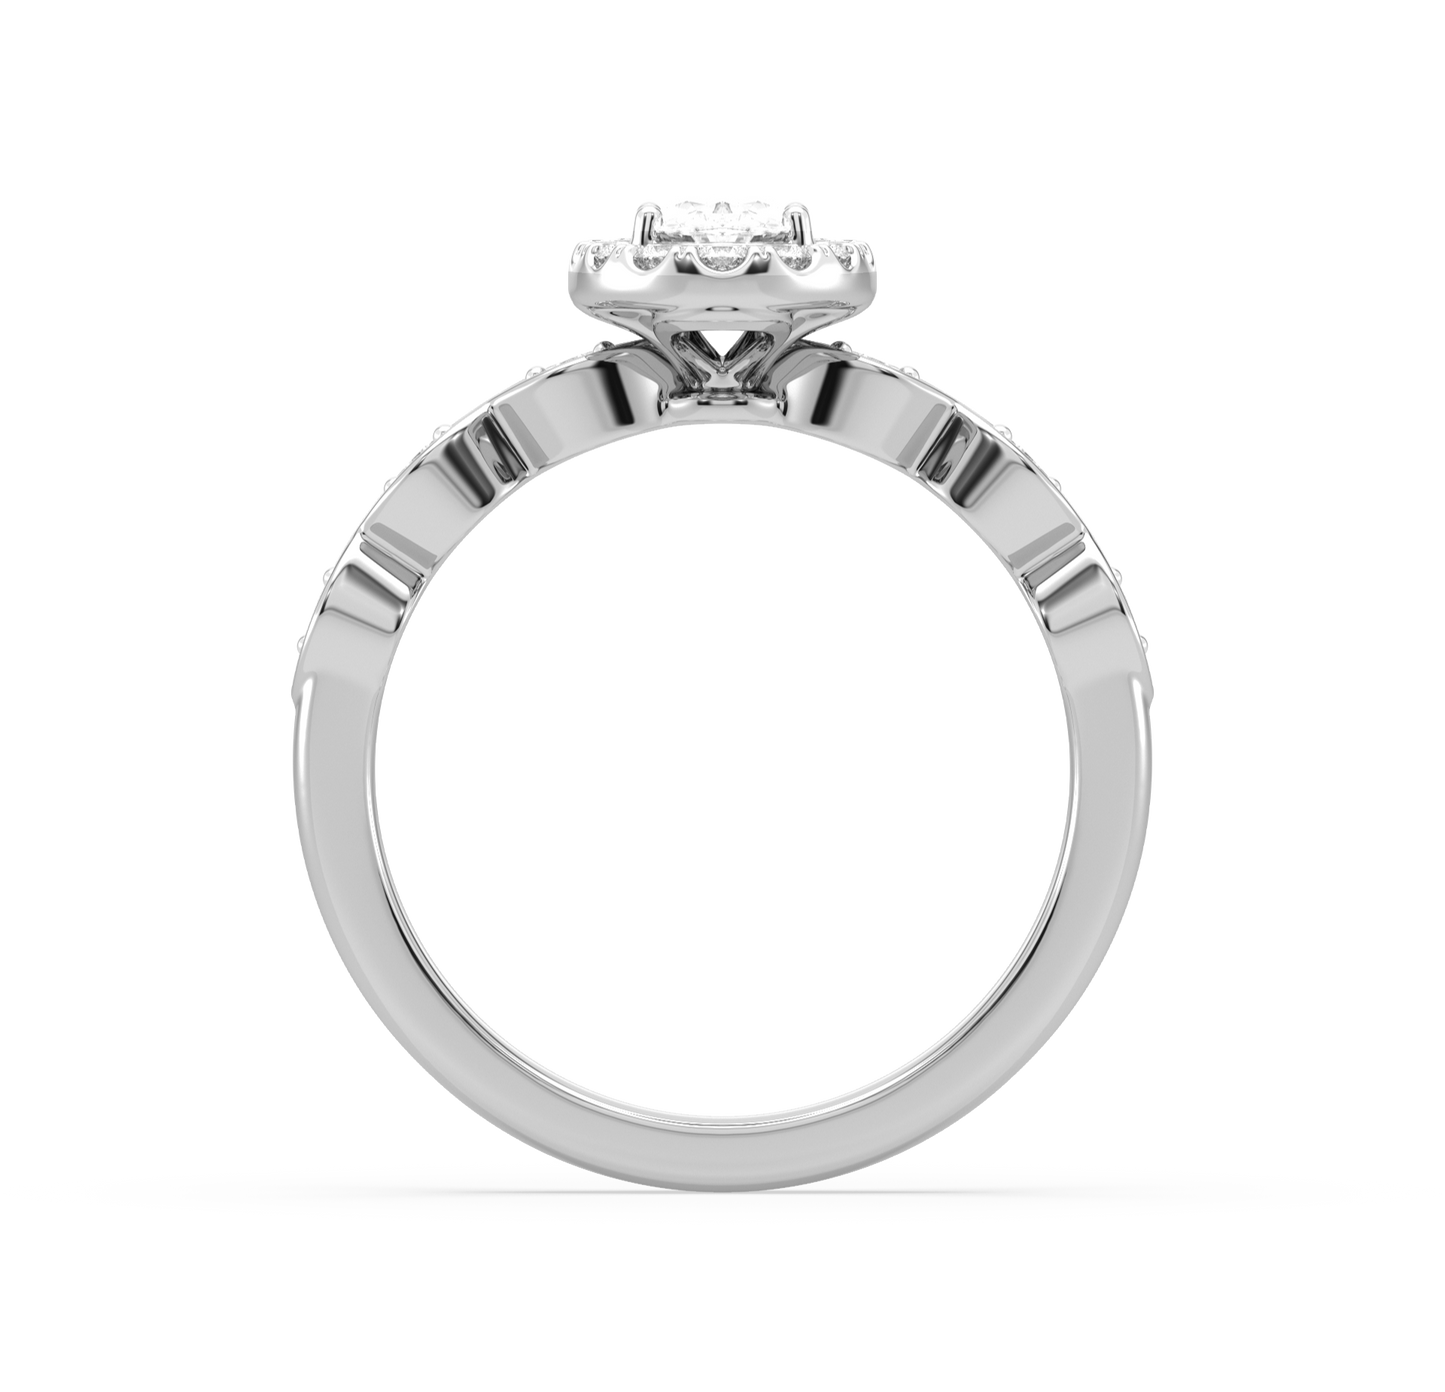 Customised ring RG21013-PH21032